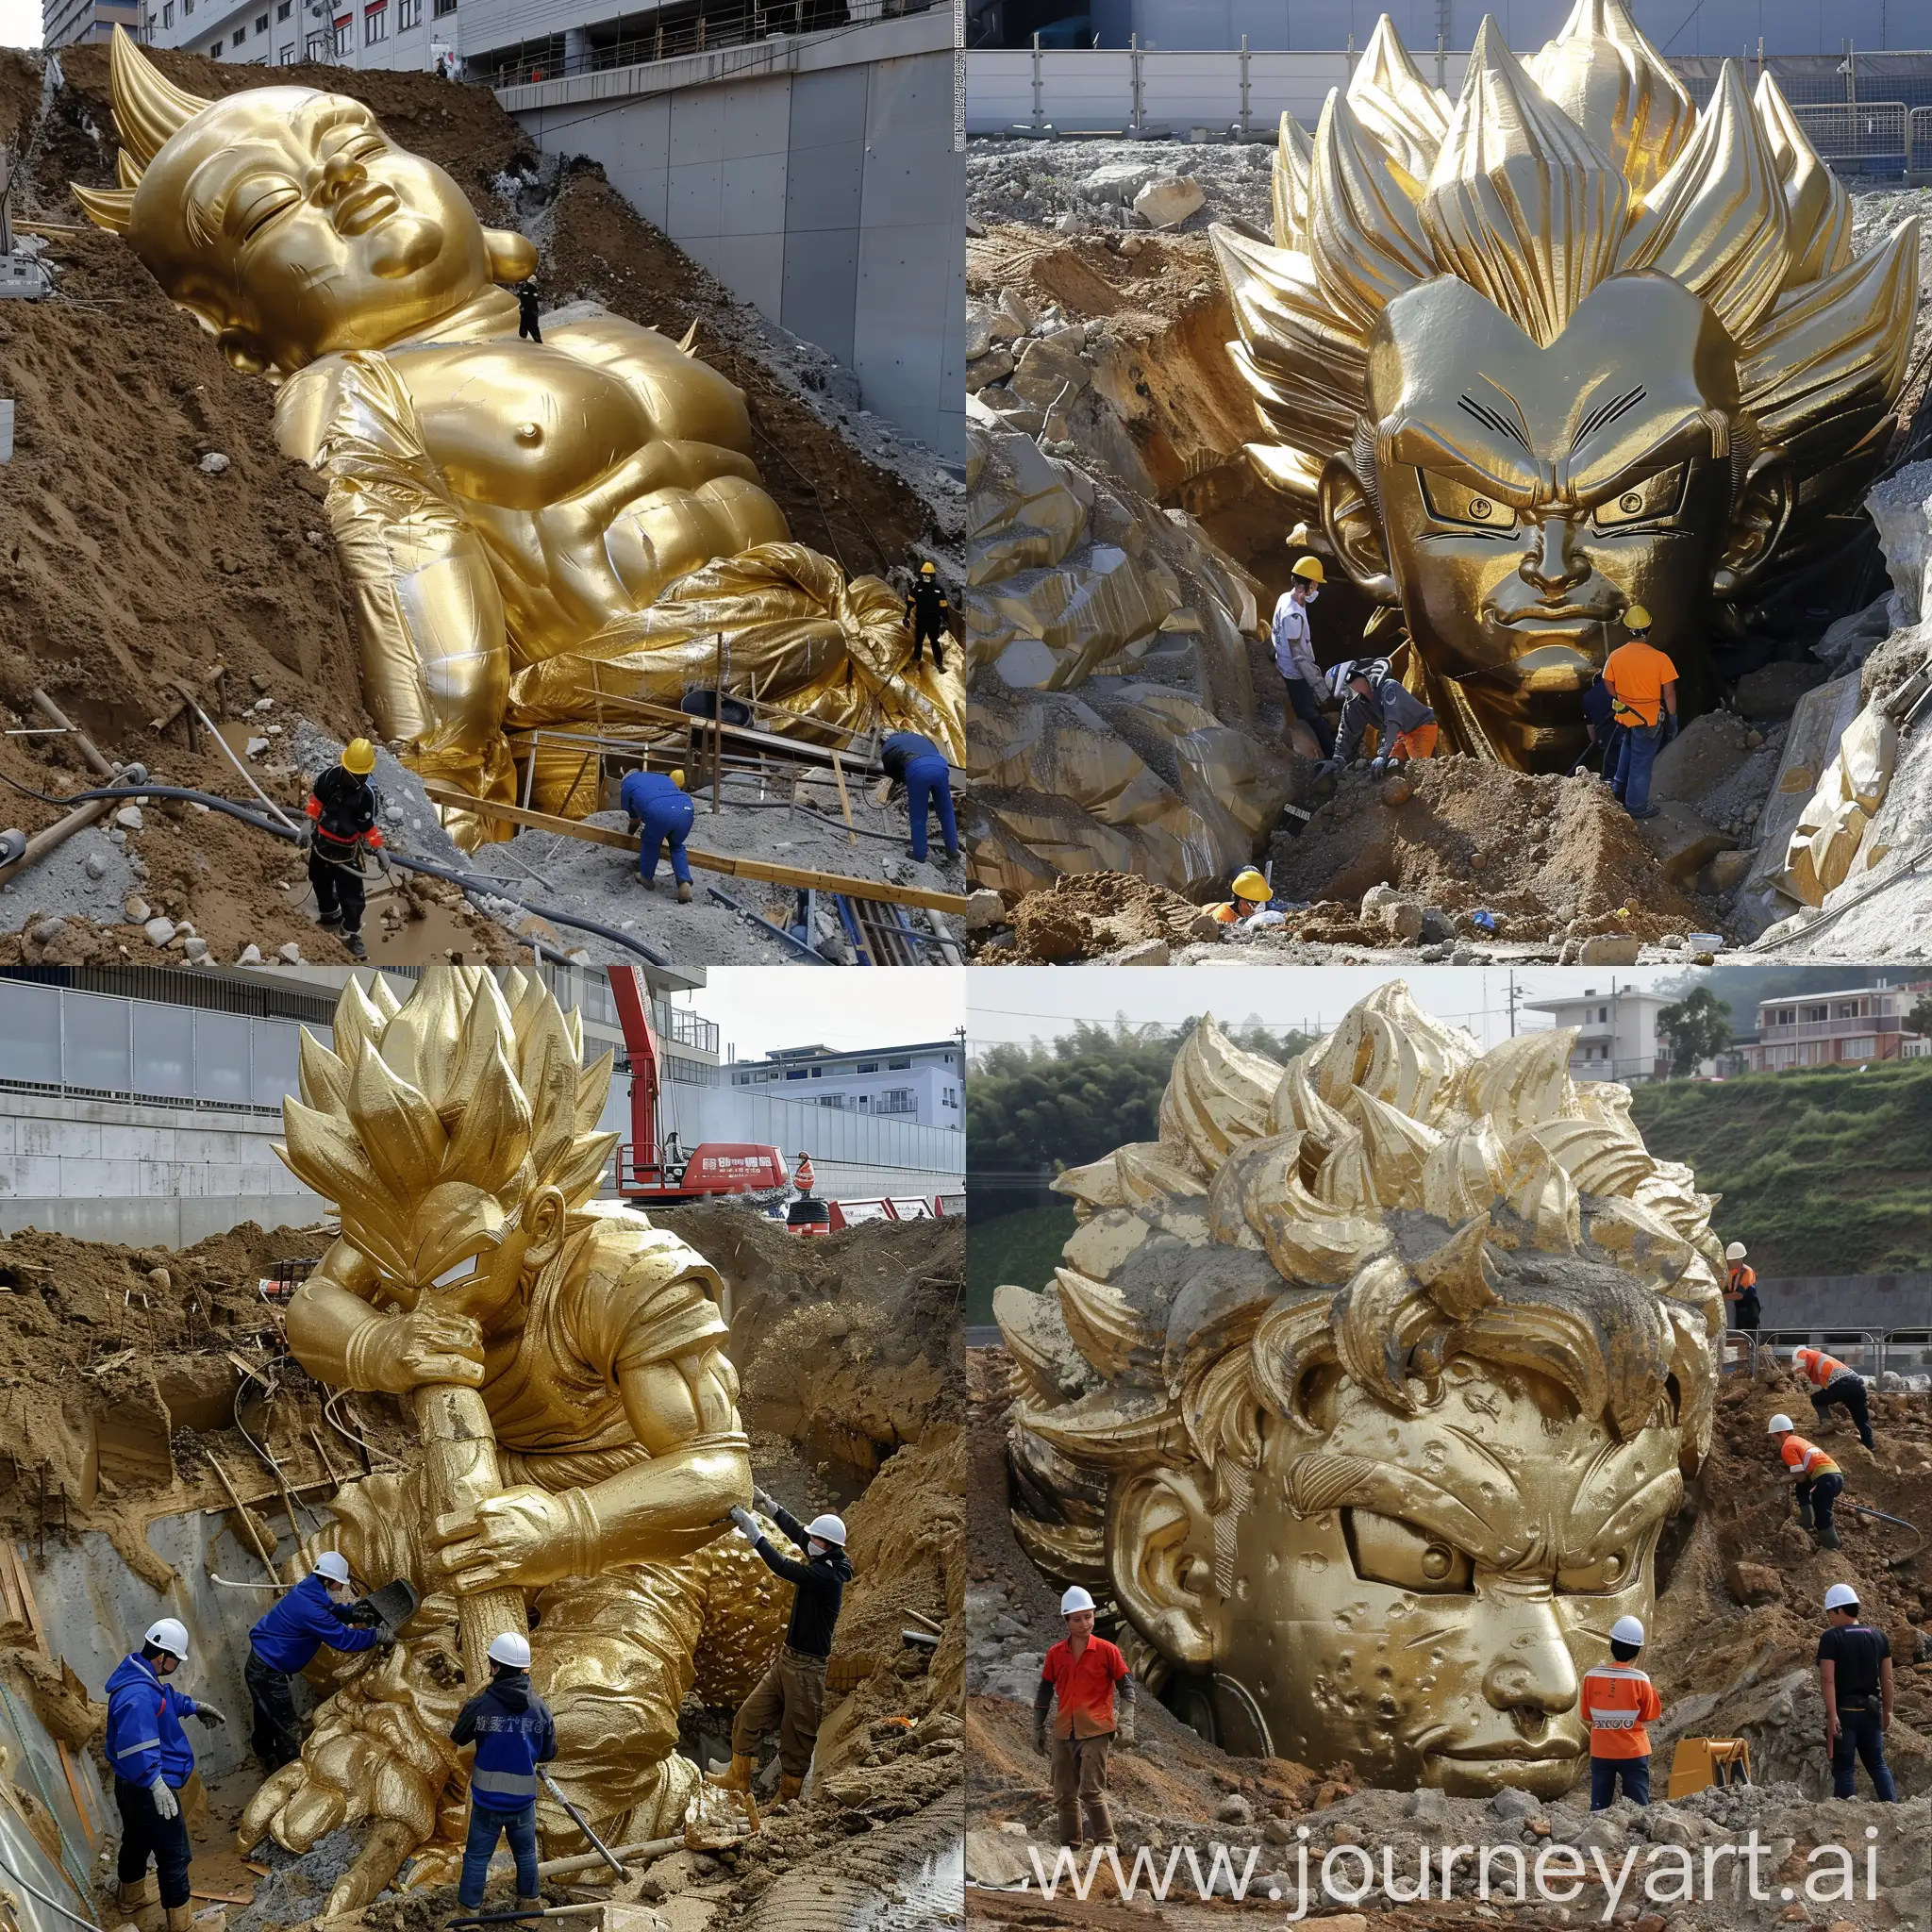 Workers-Excavating-Enormous-Akira-Toriyama-Golden-Statue